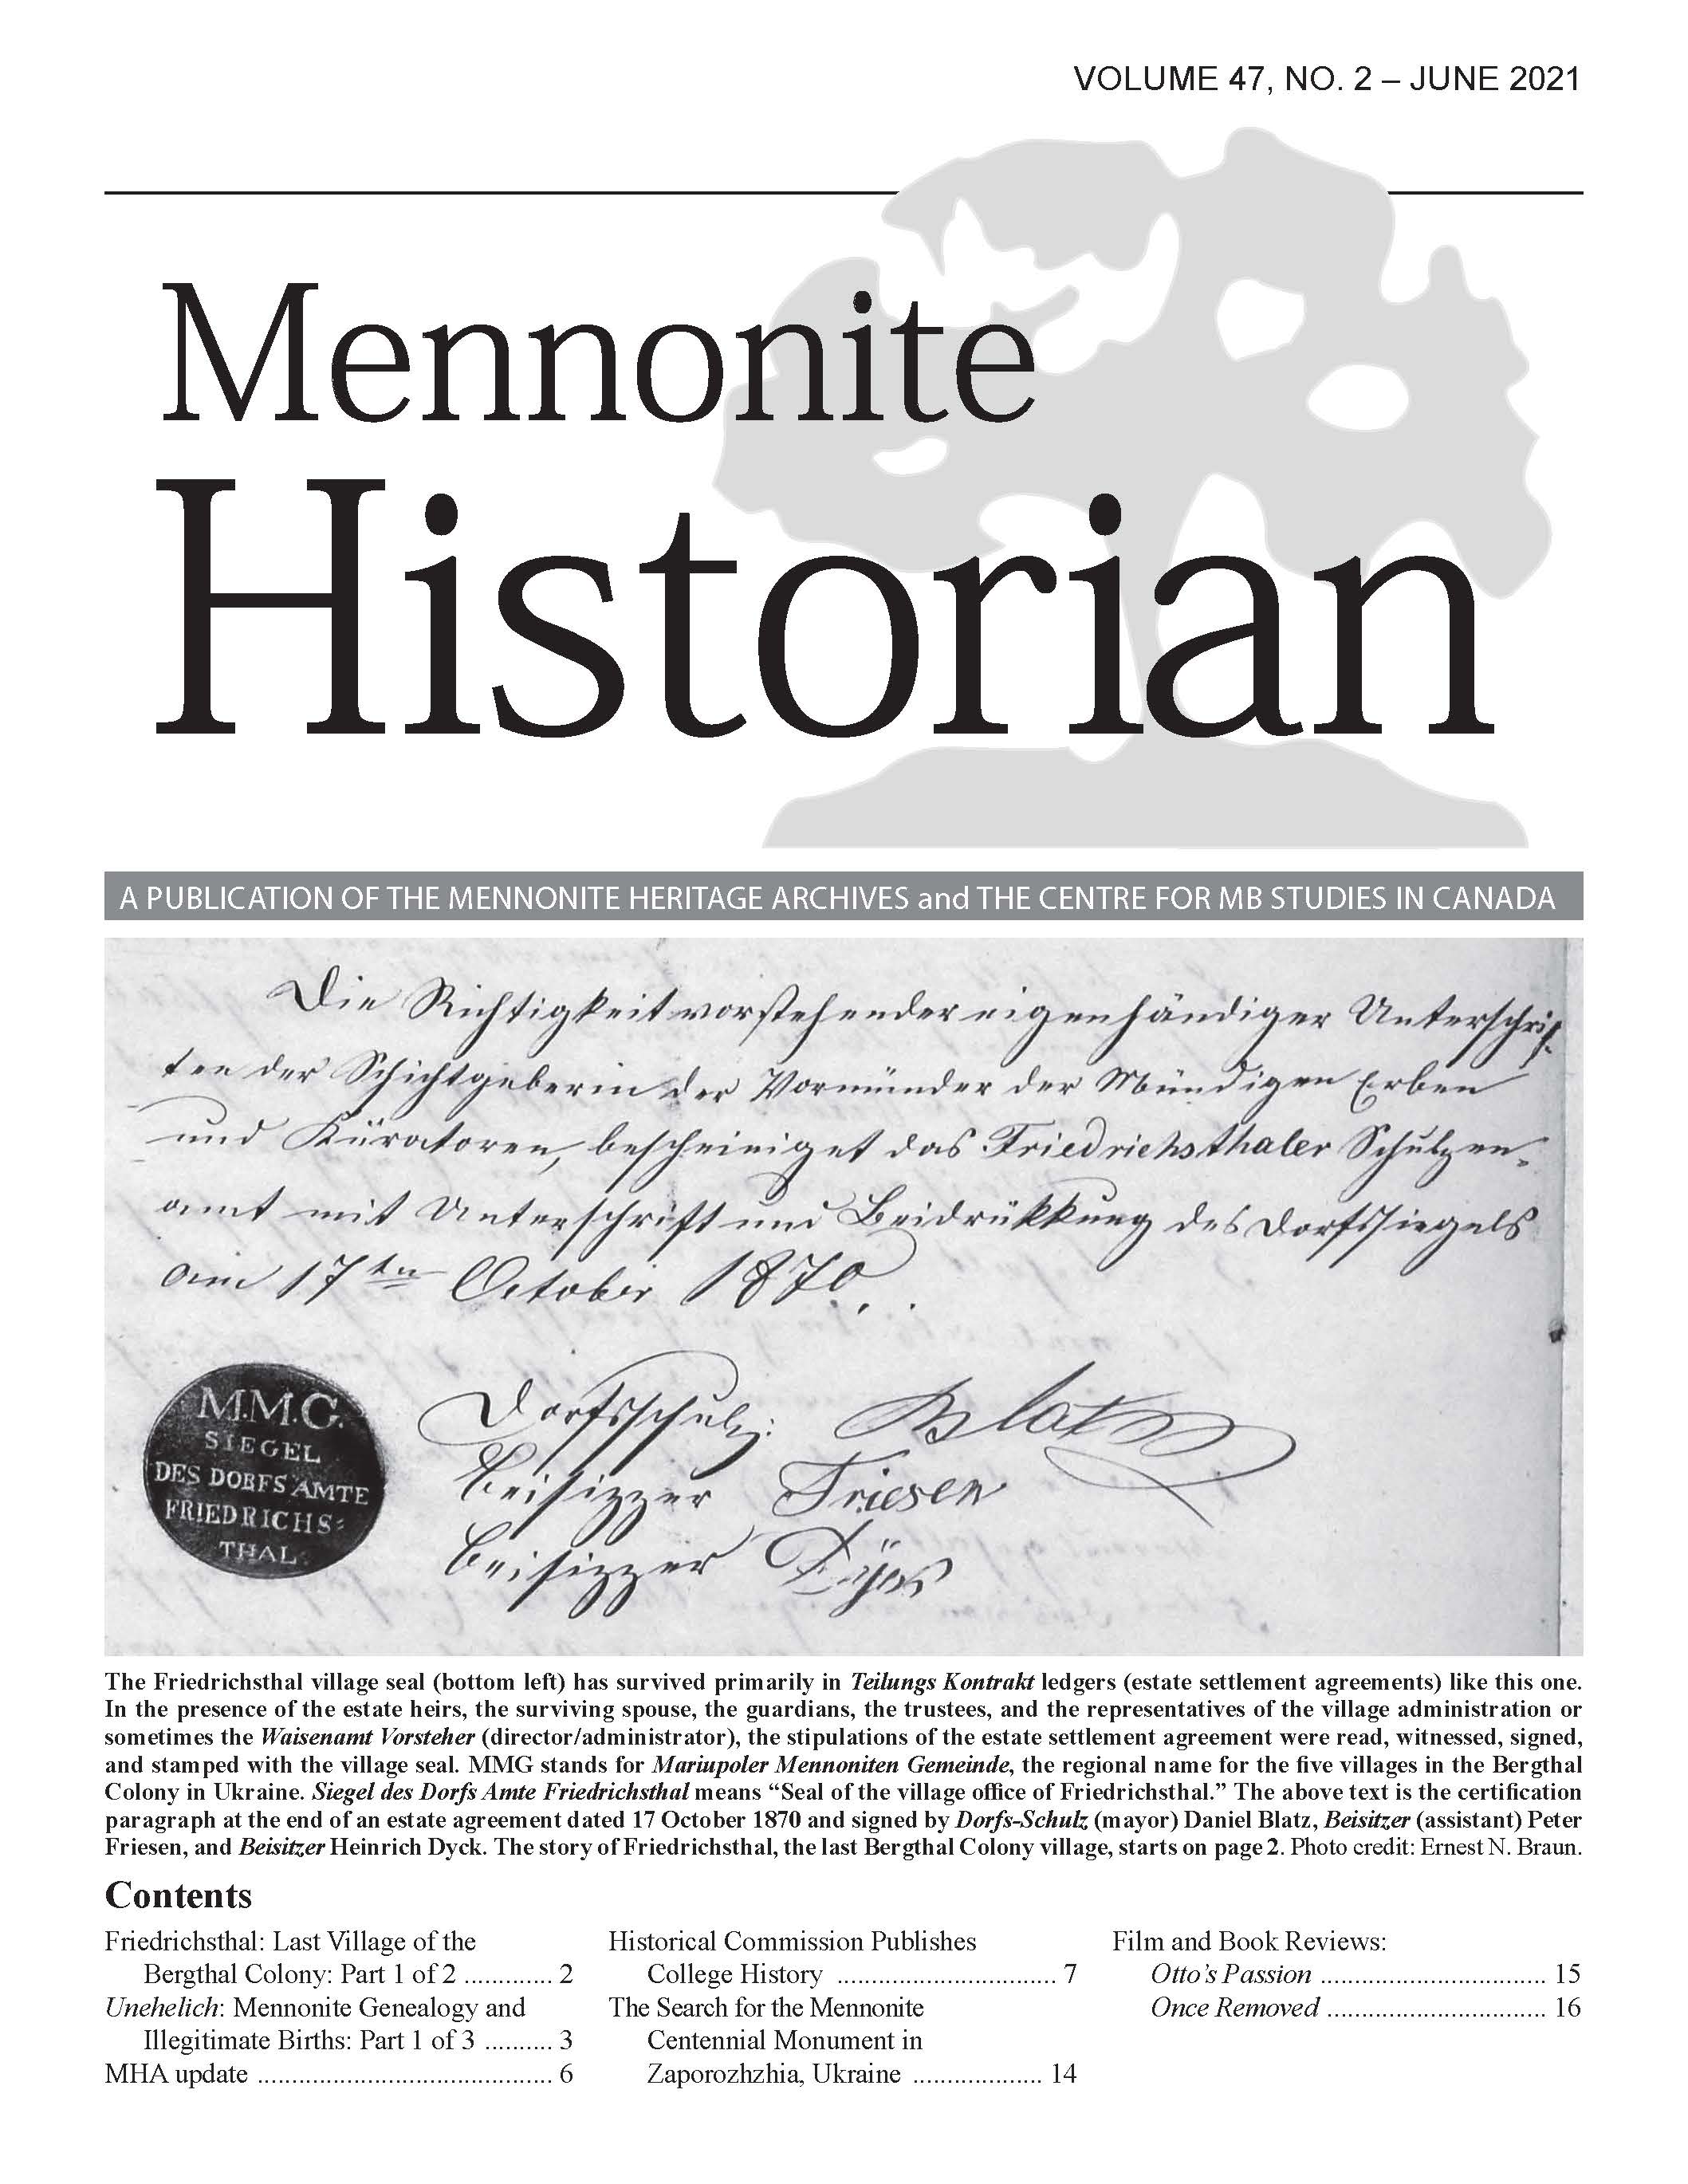 Mennonite Historian (June 2021)